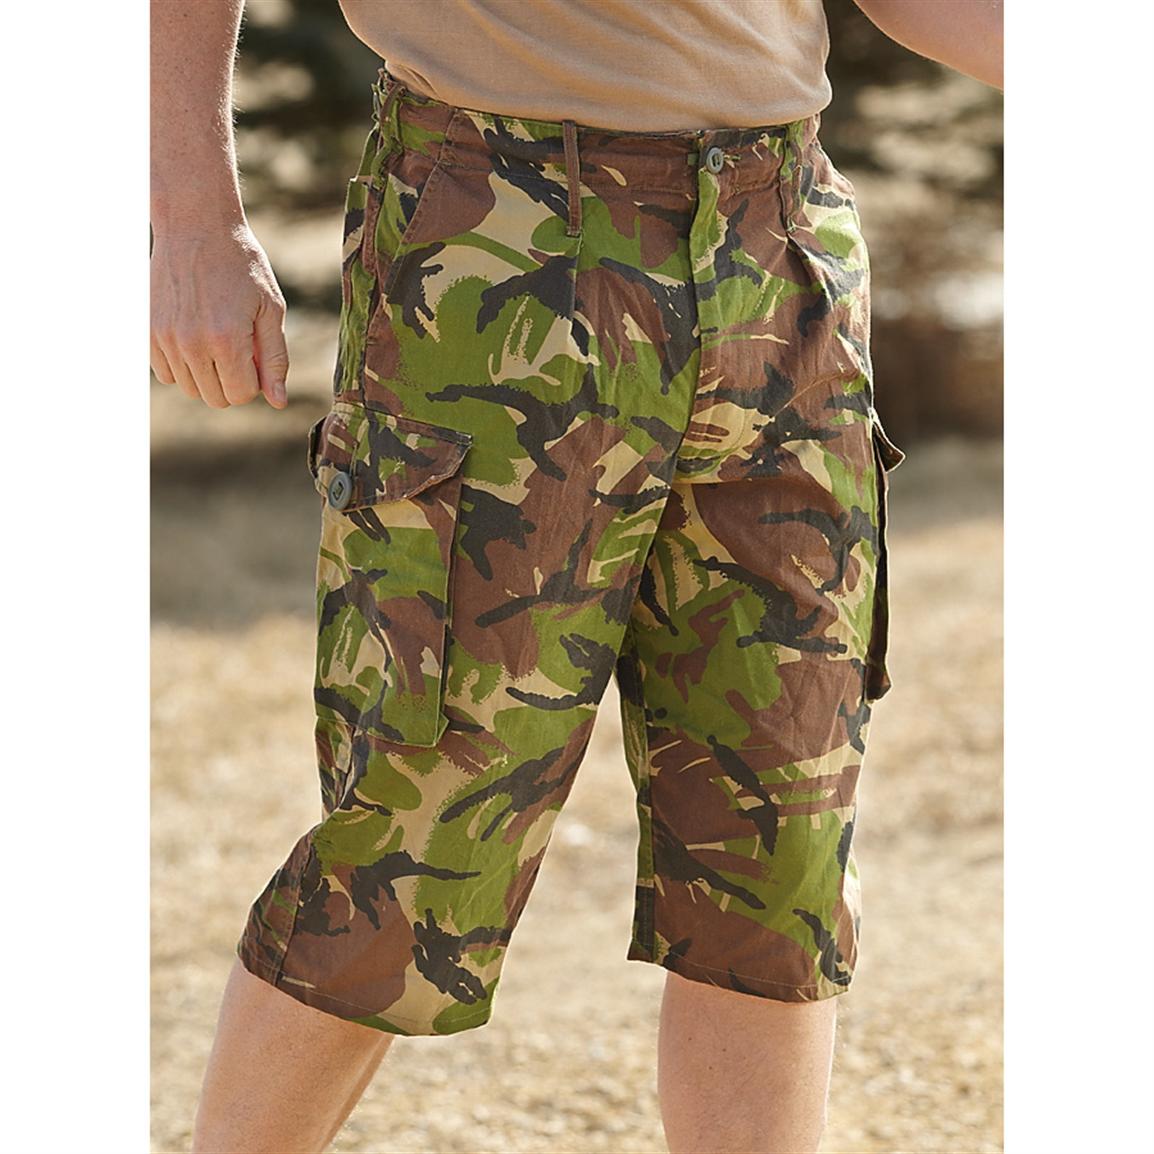 British Army Shorts - Army Military